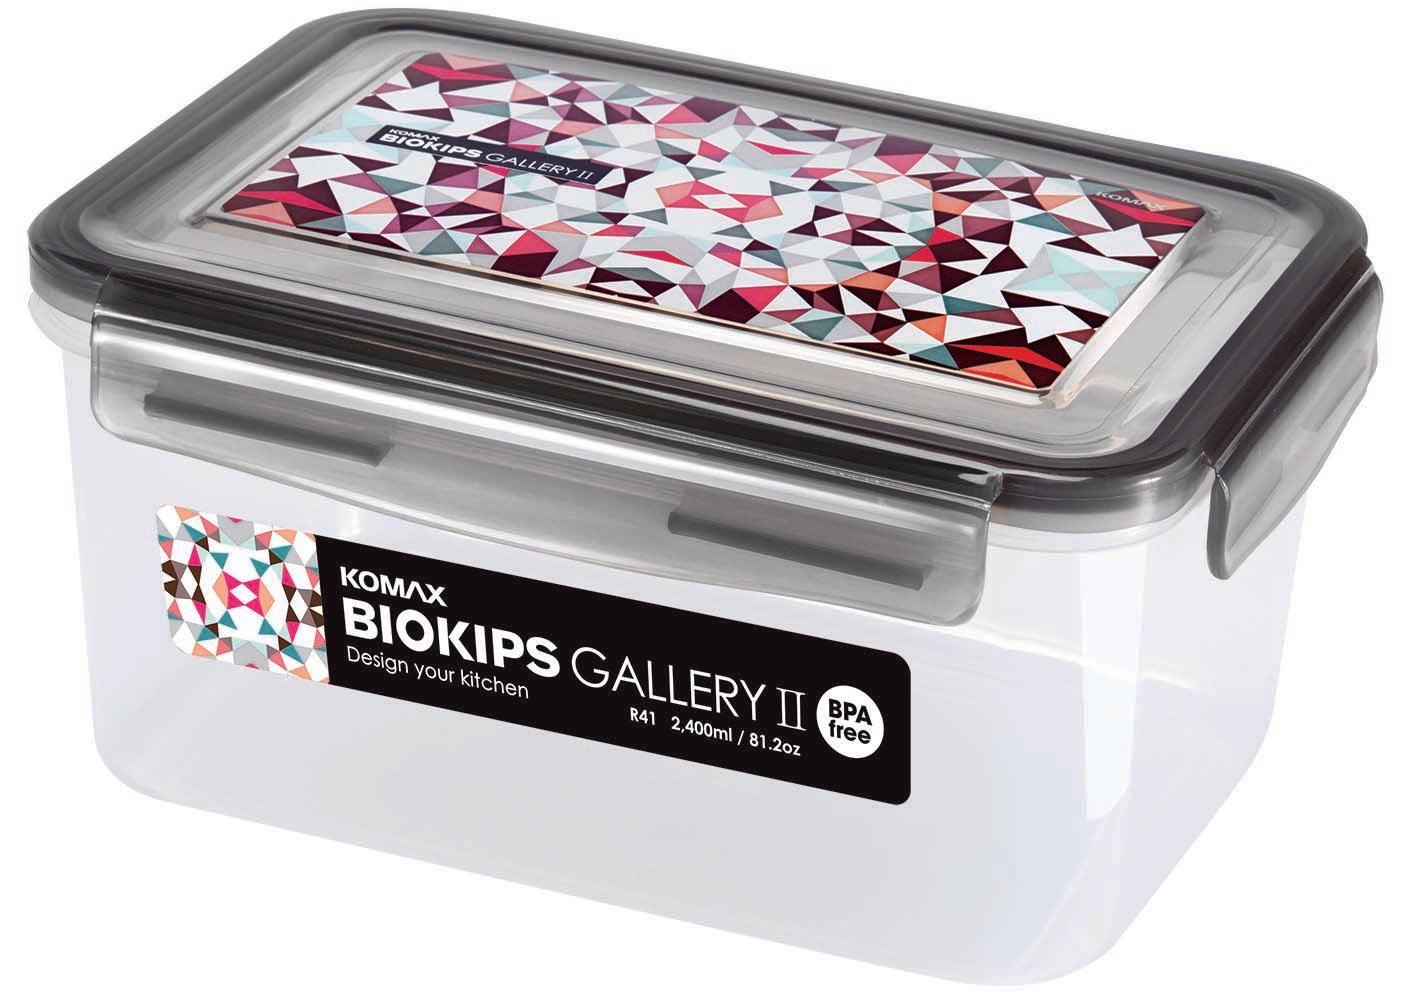 Komax Biokips Gallery II Rectangular Food Storage Container, 2.4 L